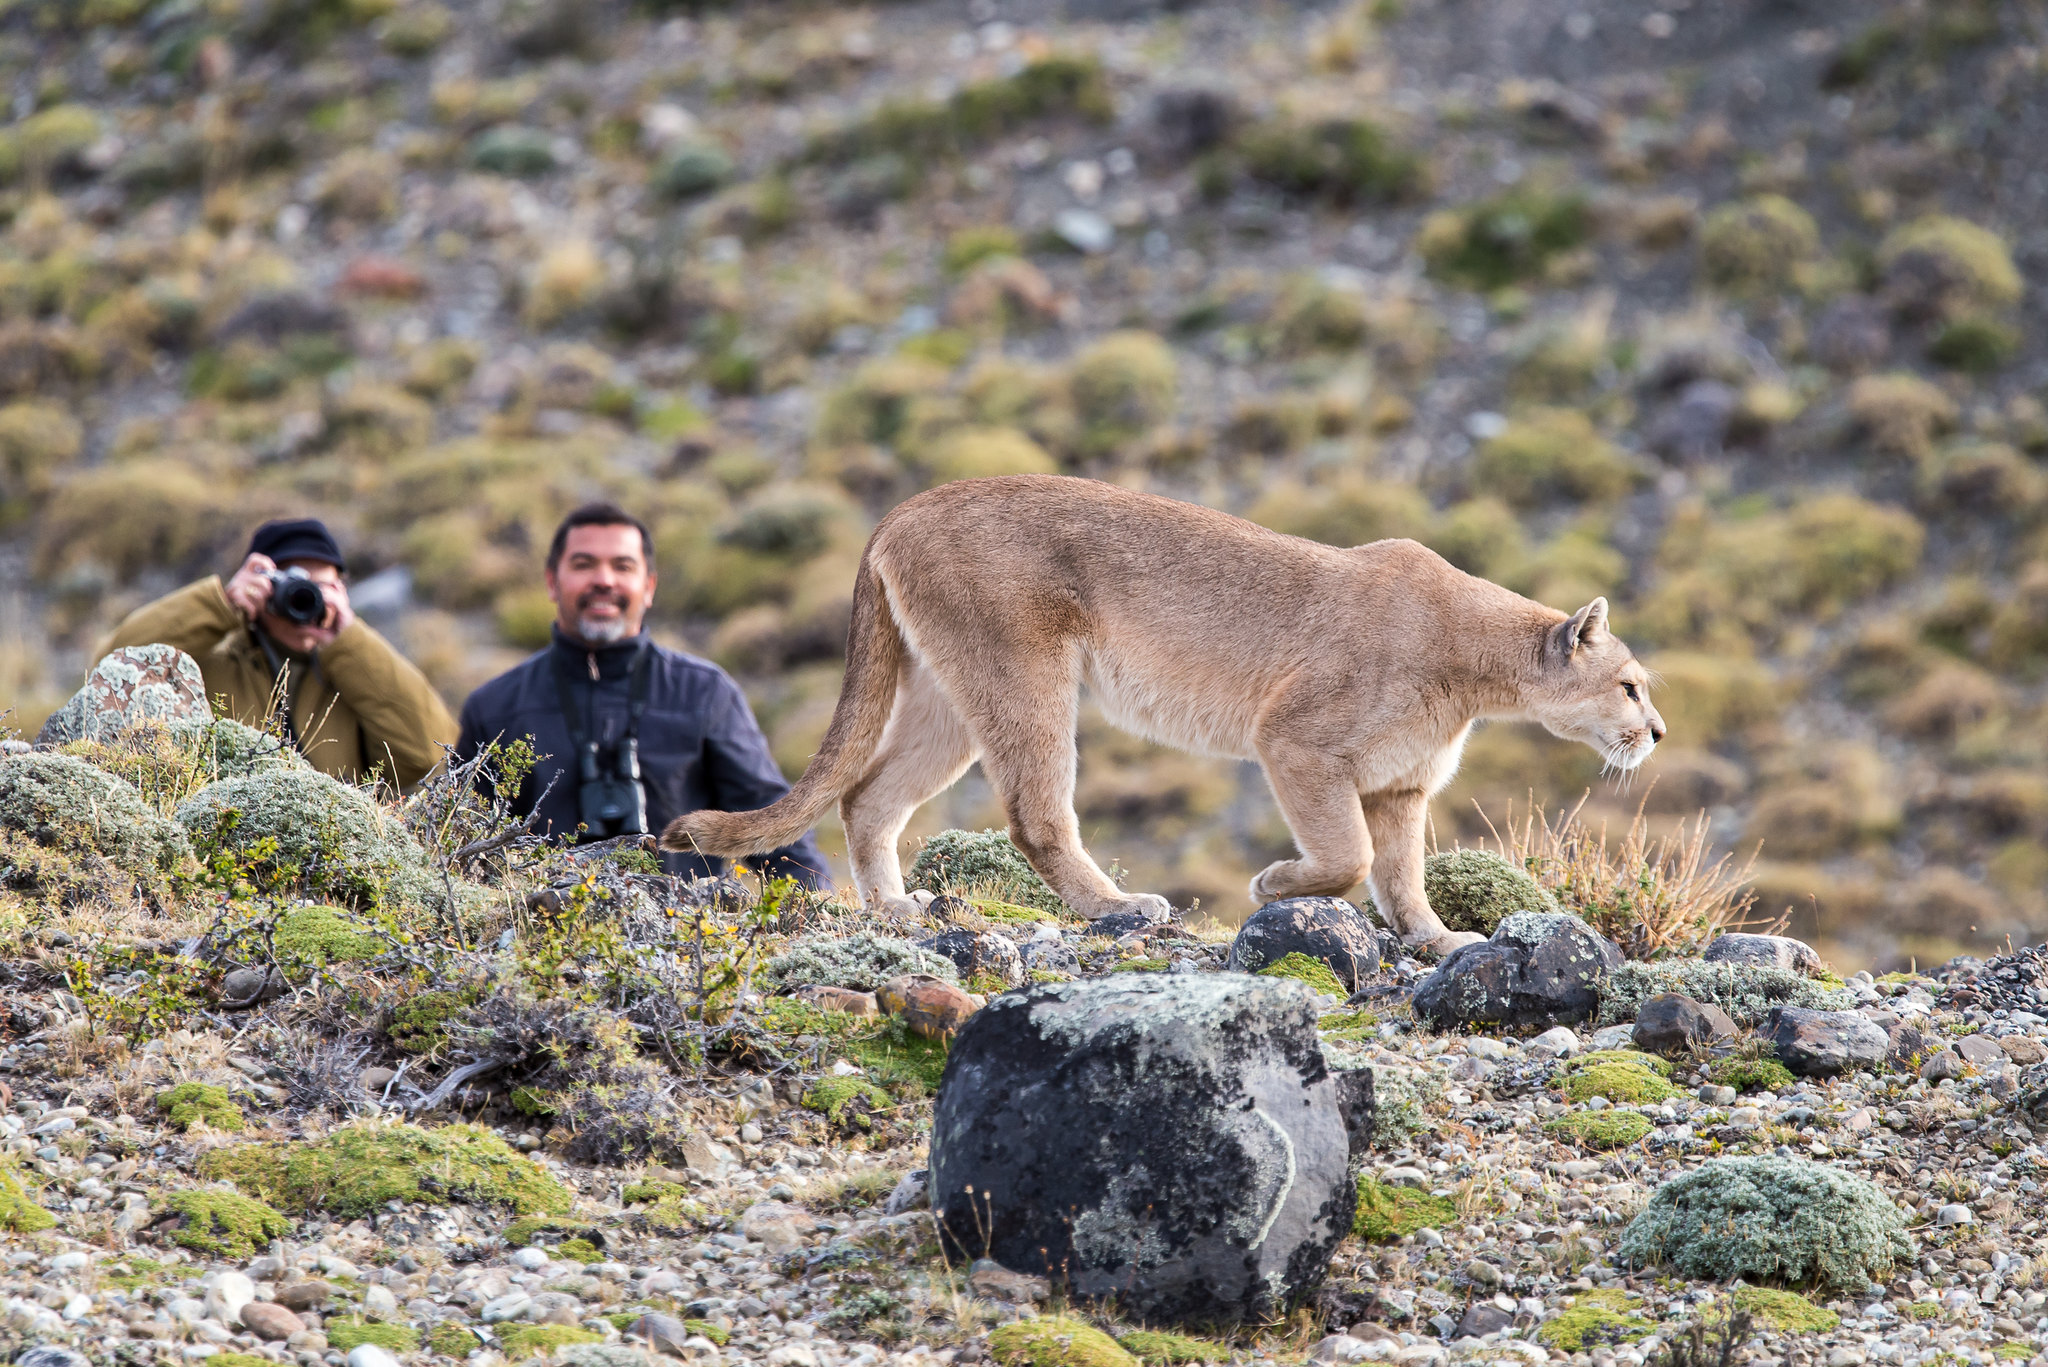 Spotting Pumas in Wild